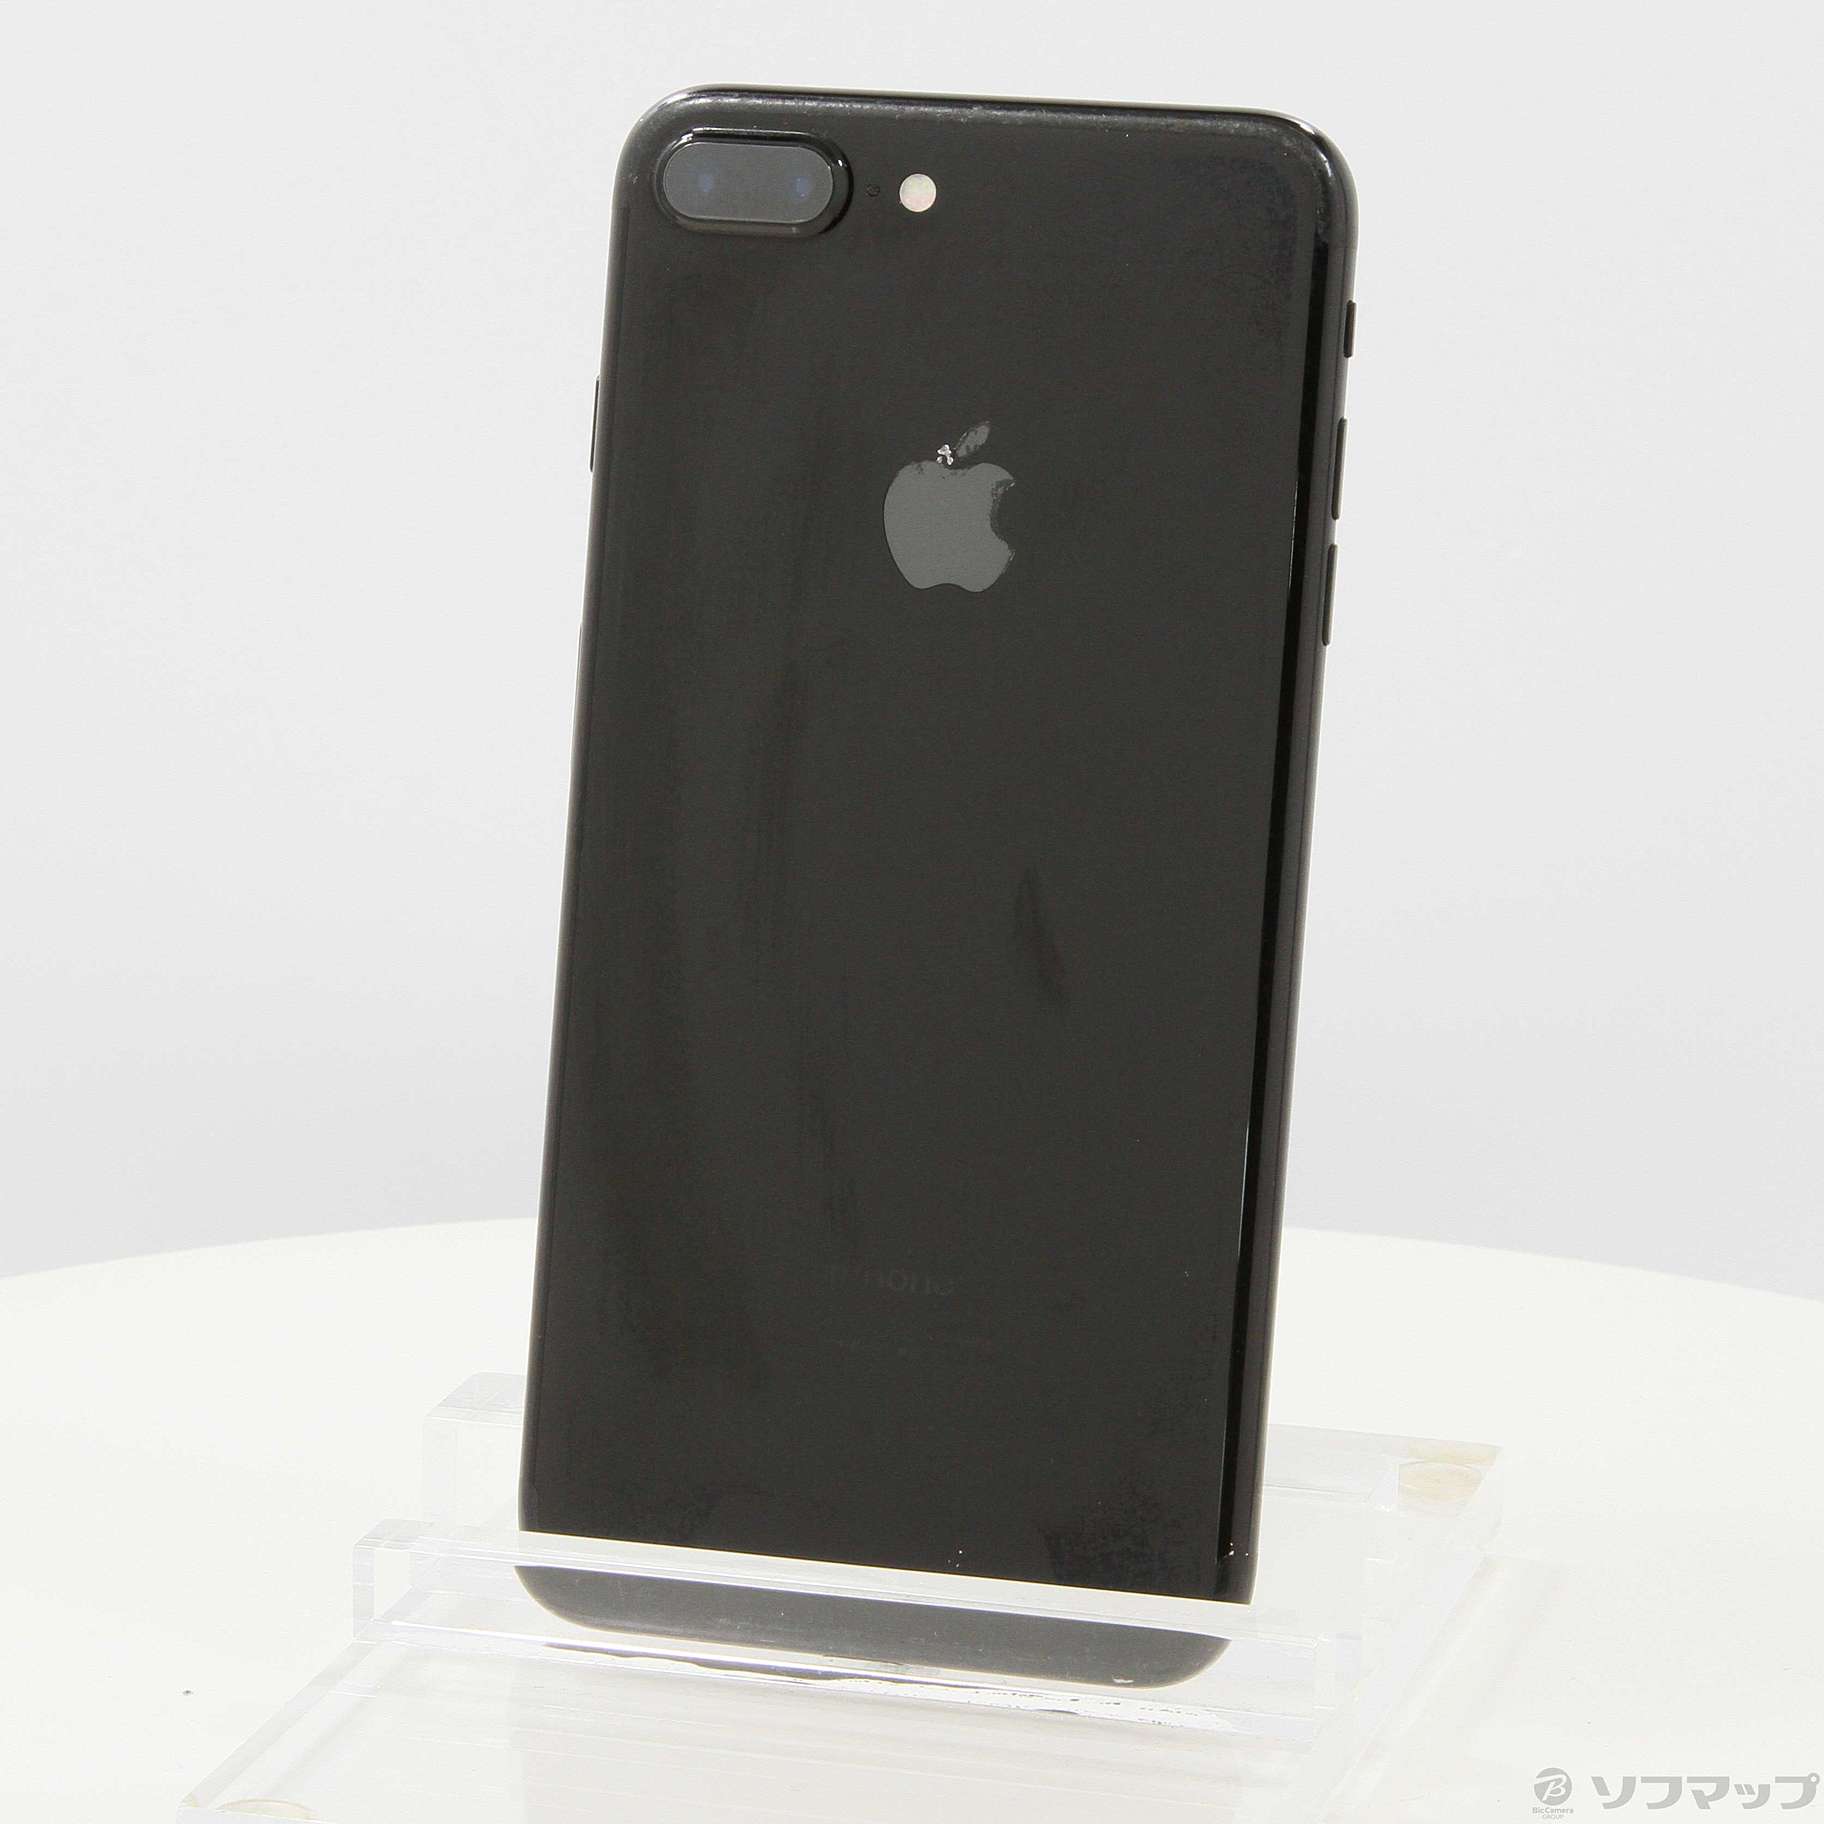 iPhone 7 Plus 256 GB SIMフリー